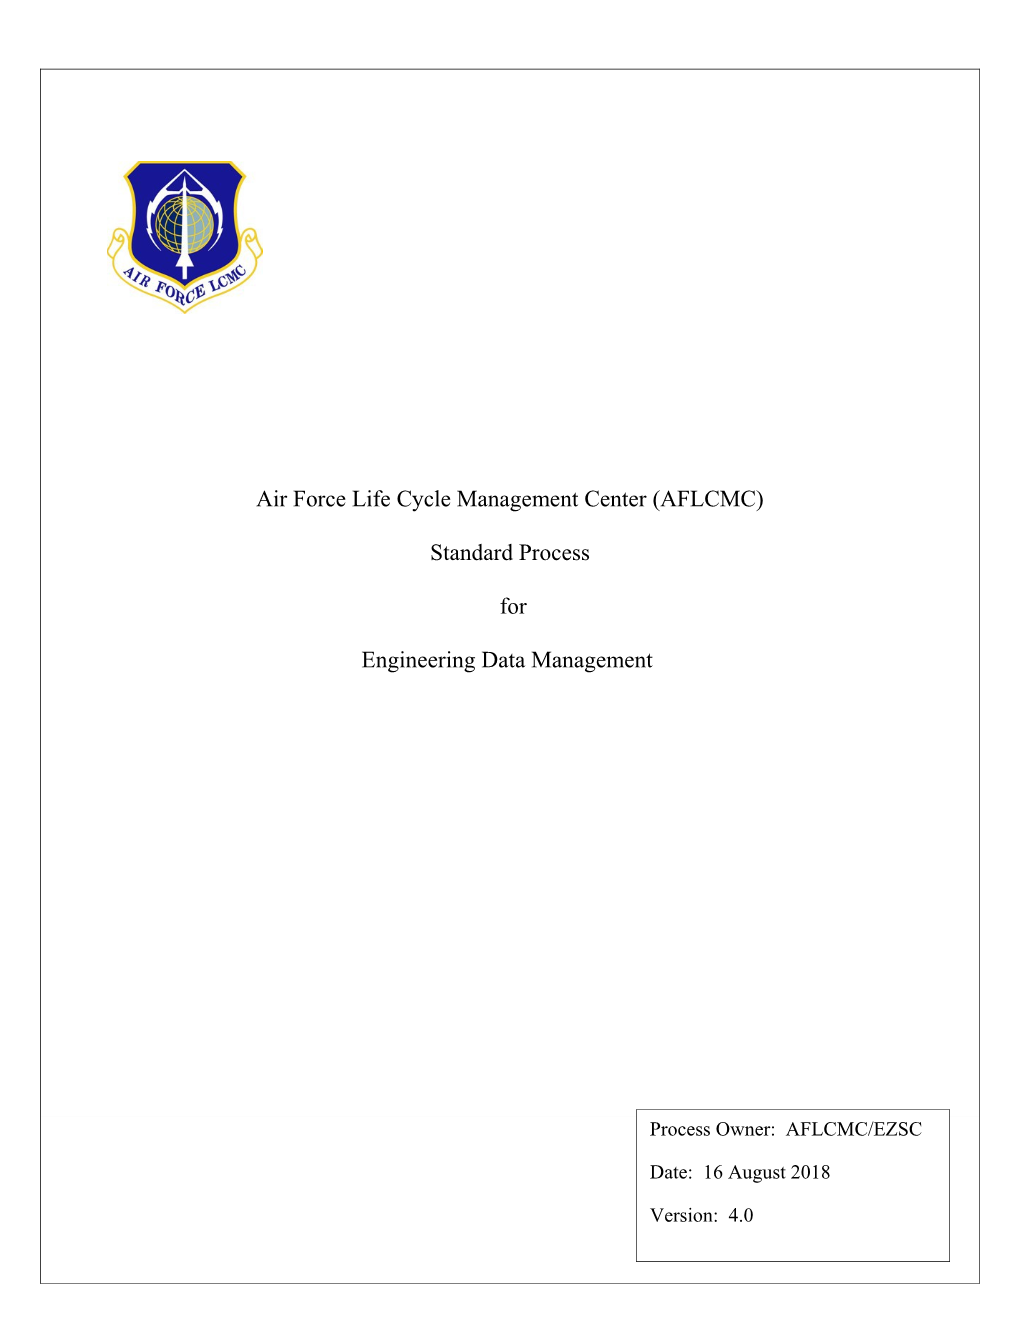 Engineering Data Management (EDM)